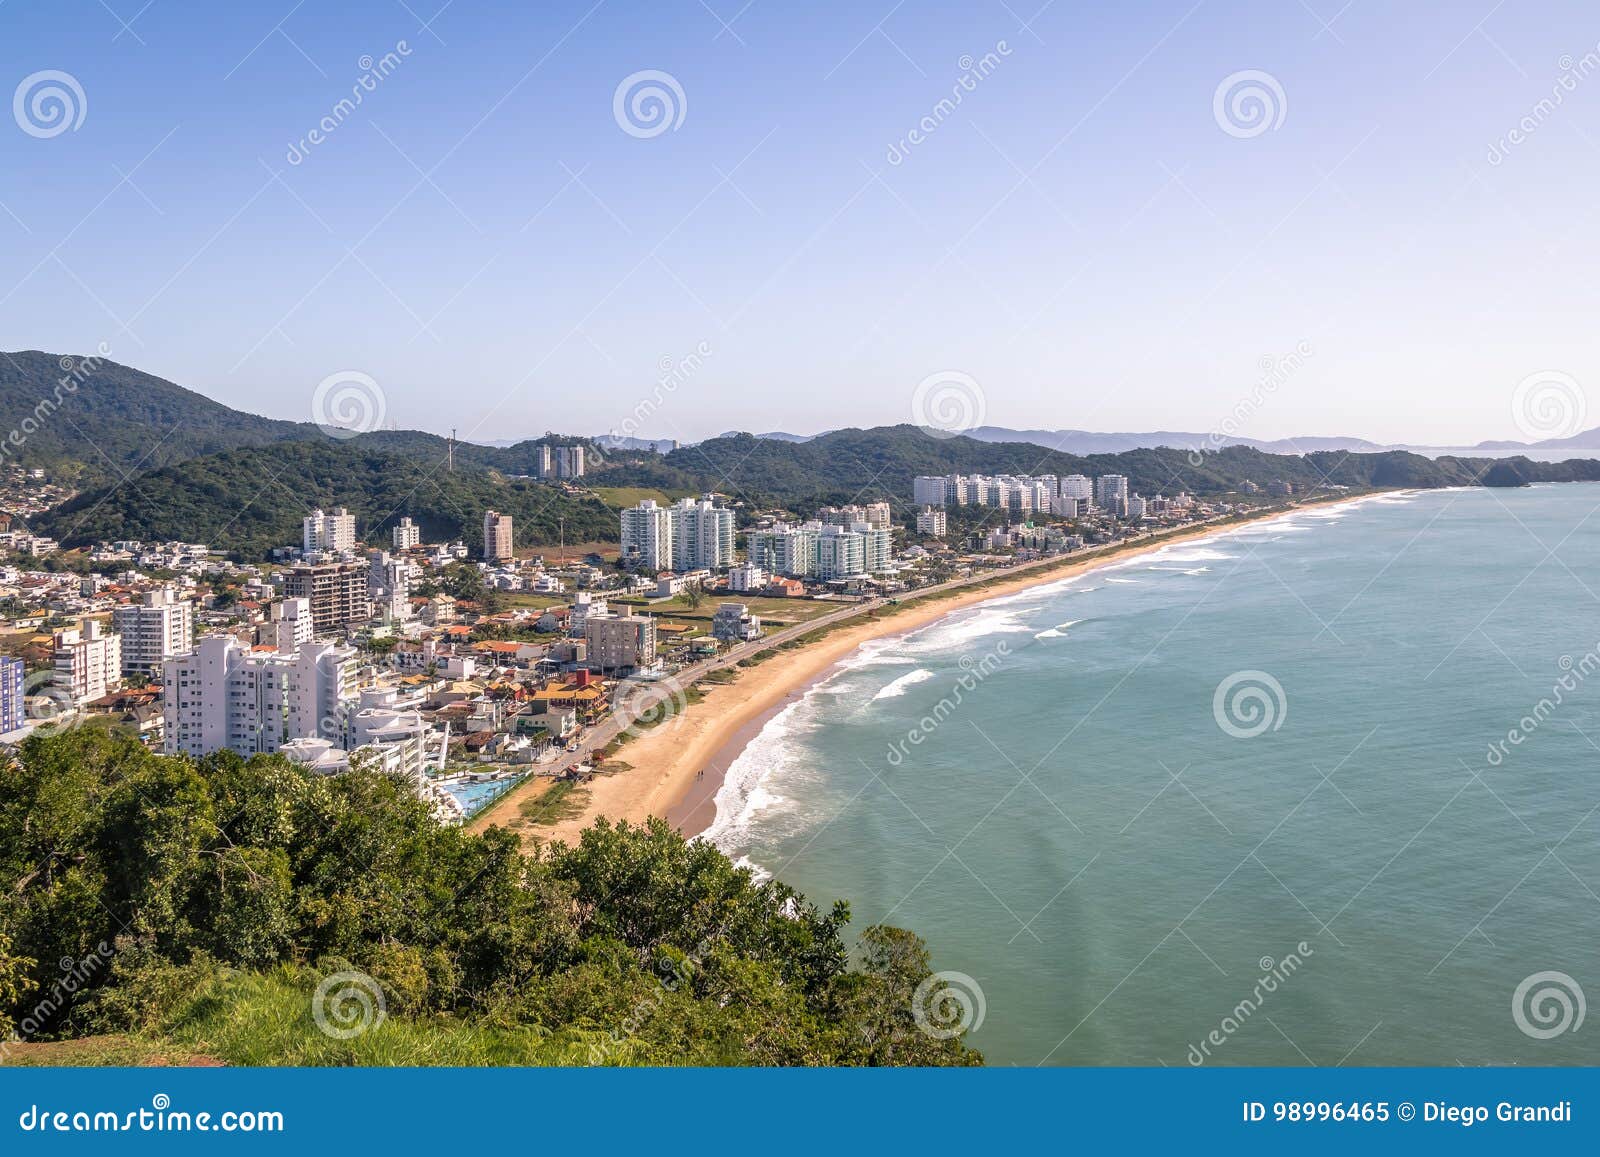 aerial view of itajai city and praia brava beach - balneario camboriu, santa catarina, brazil